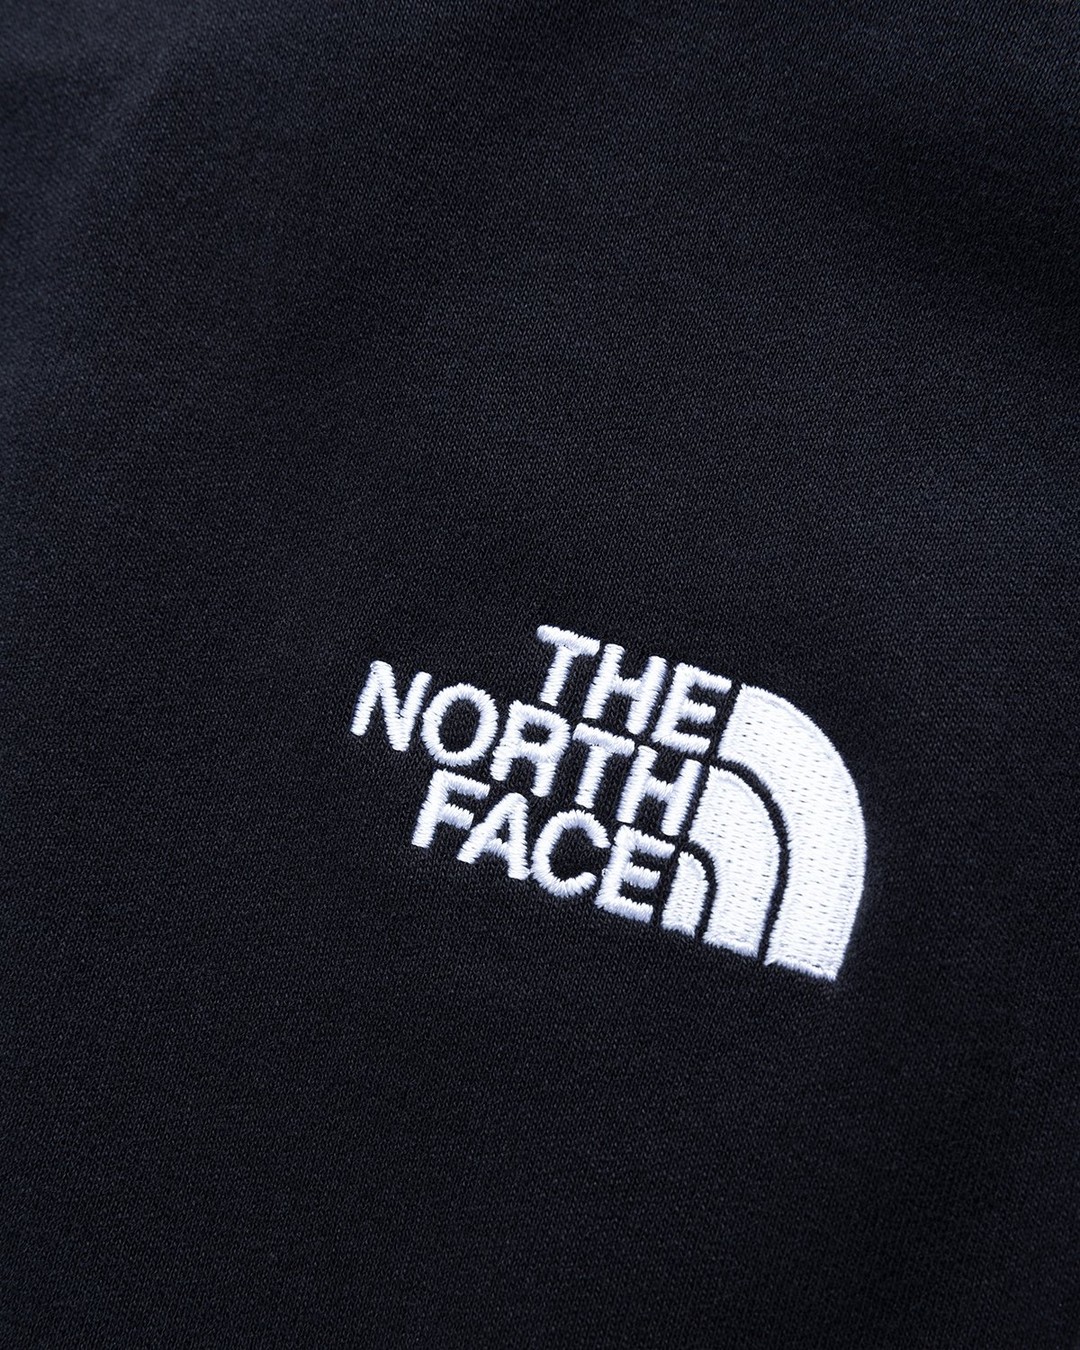 The North Face – Longsleeve Black - Longsleeves - Black - Image 4